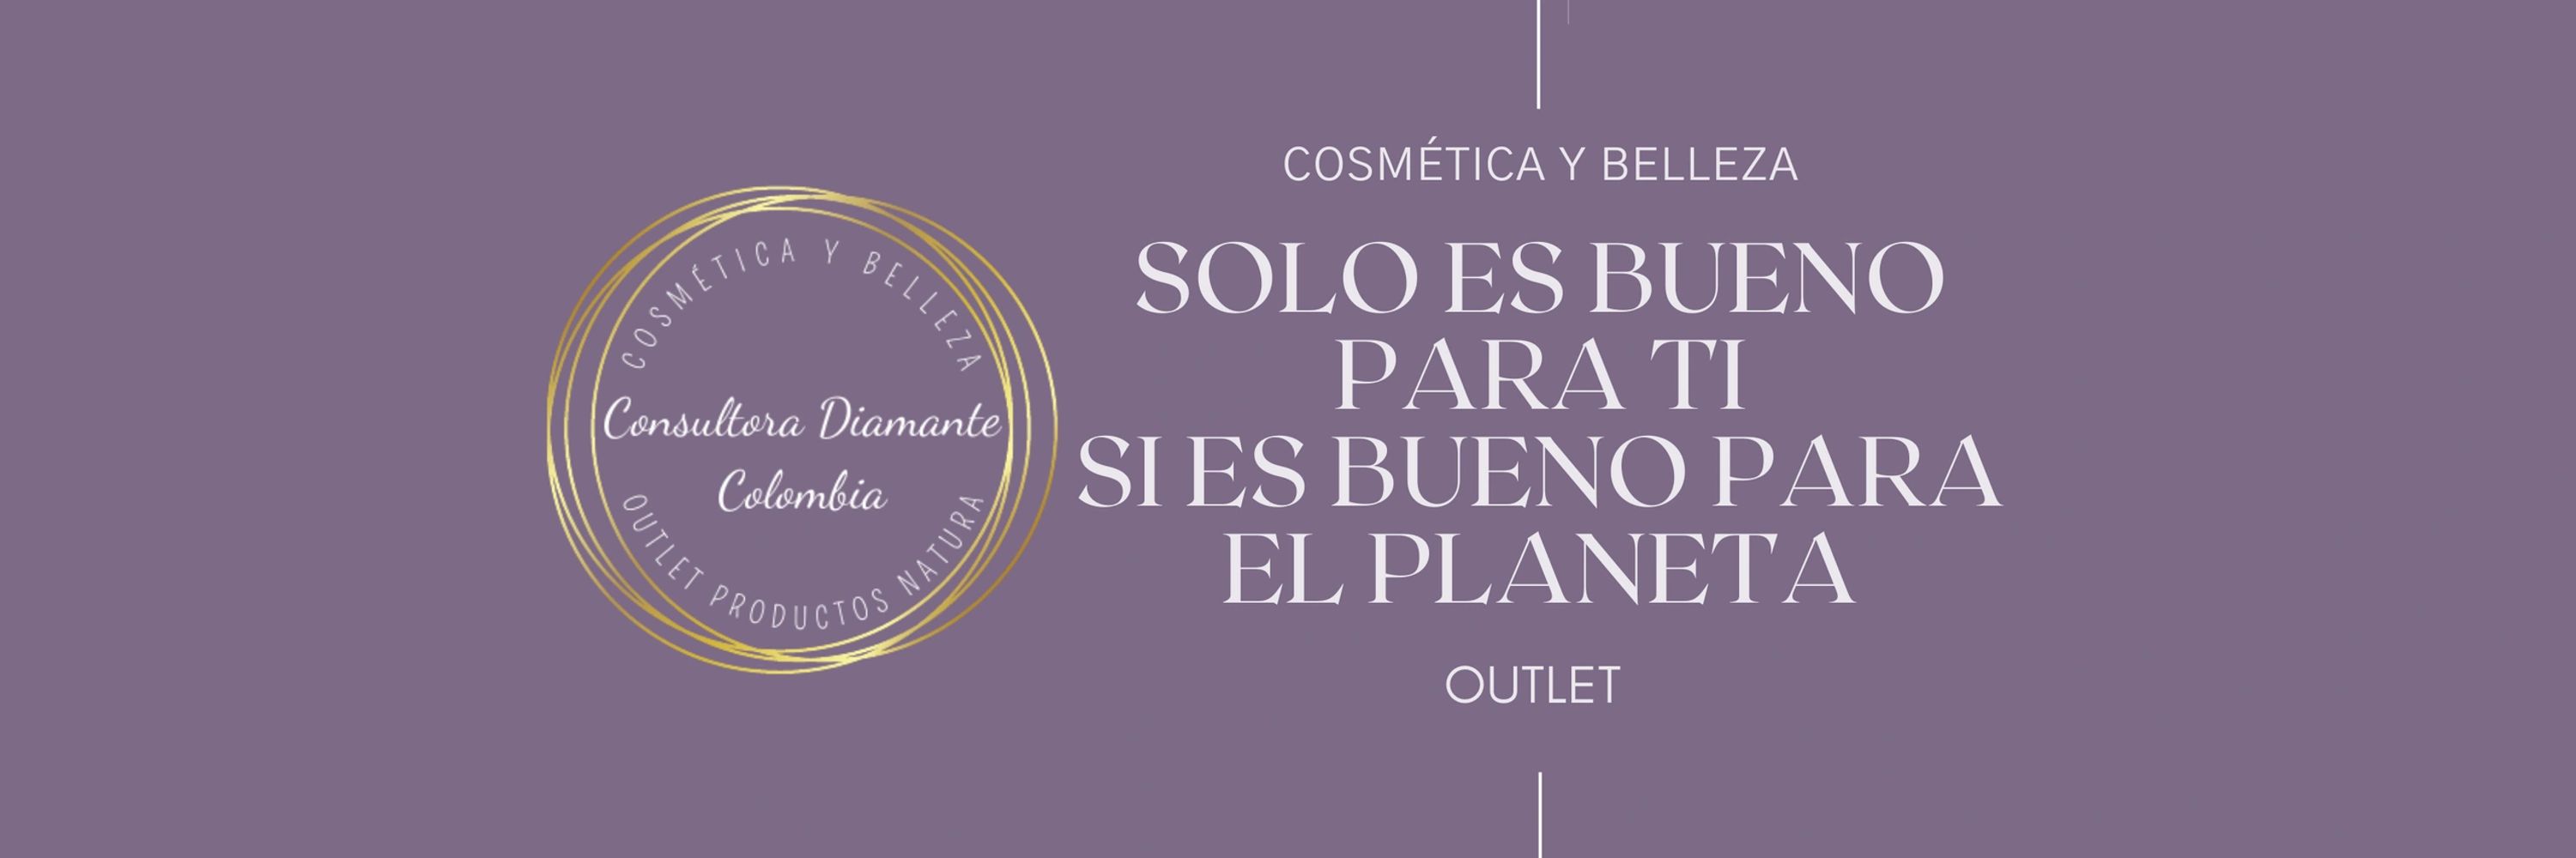 Consultora Diamante Colombia - Productos Natura, Natura Cosmeticos,  Productos Veganos, Productos Natura